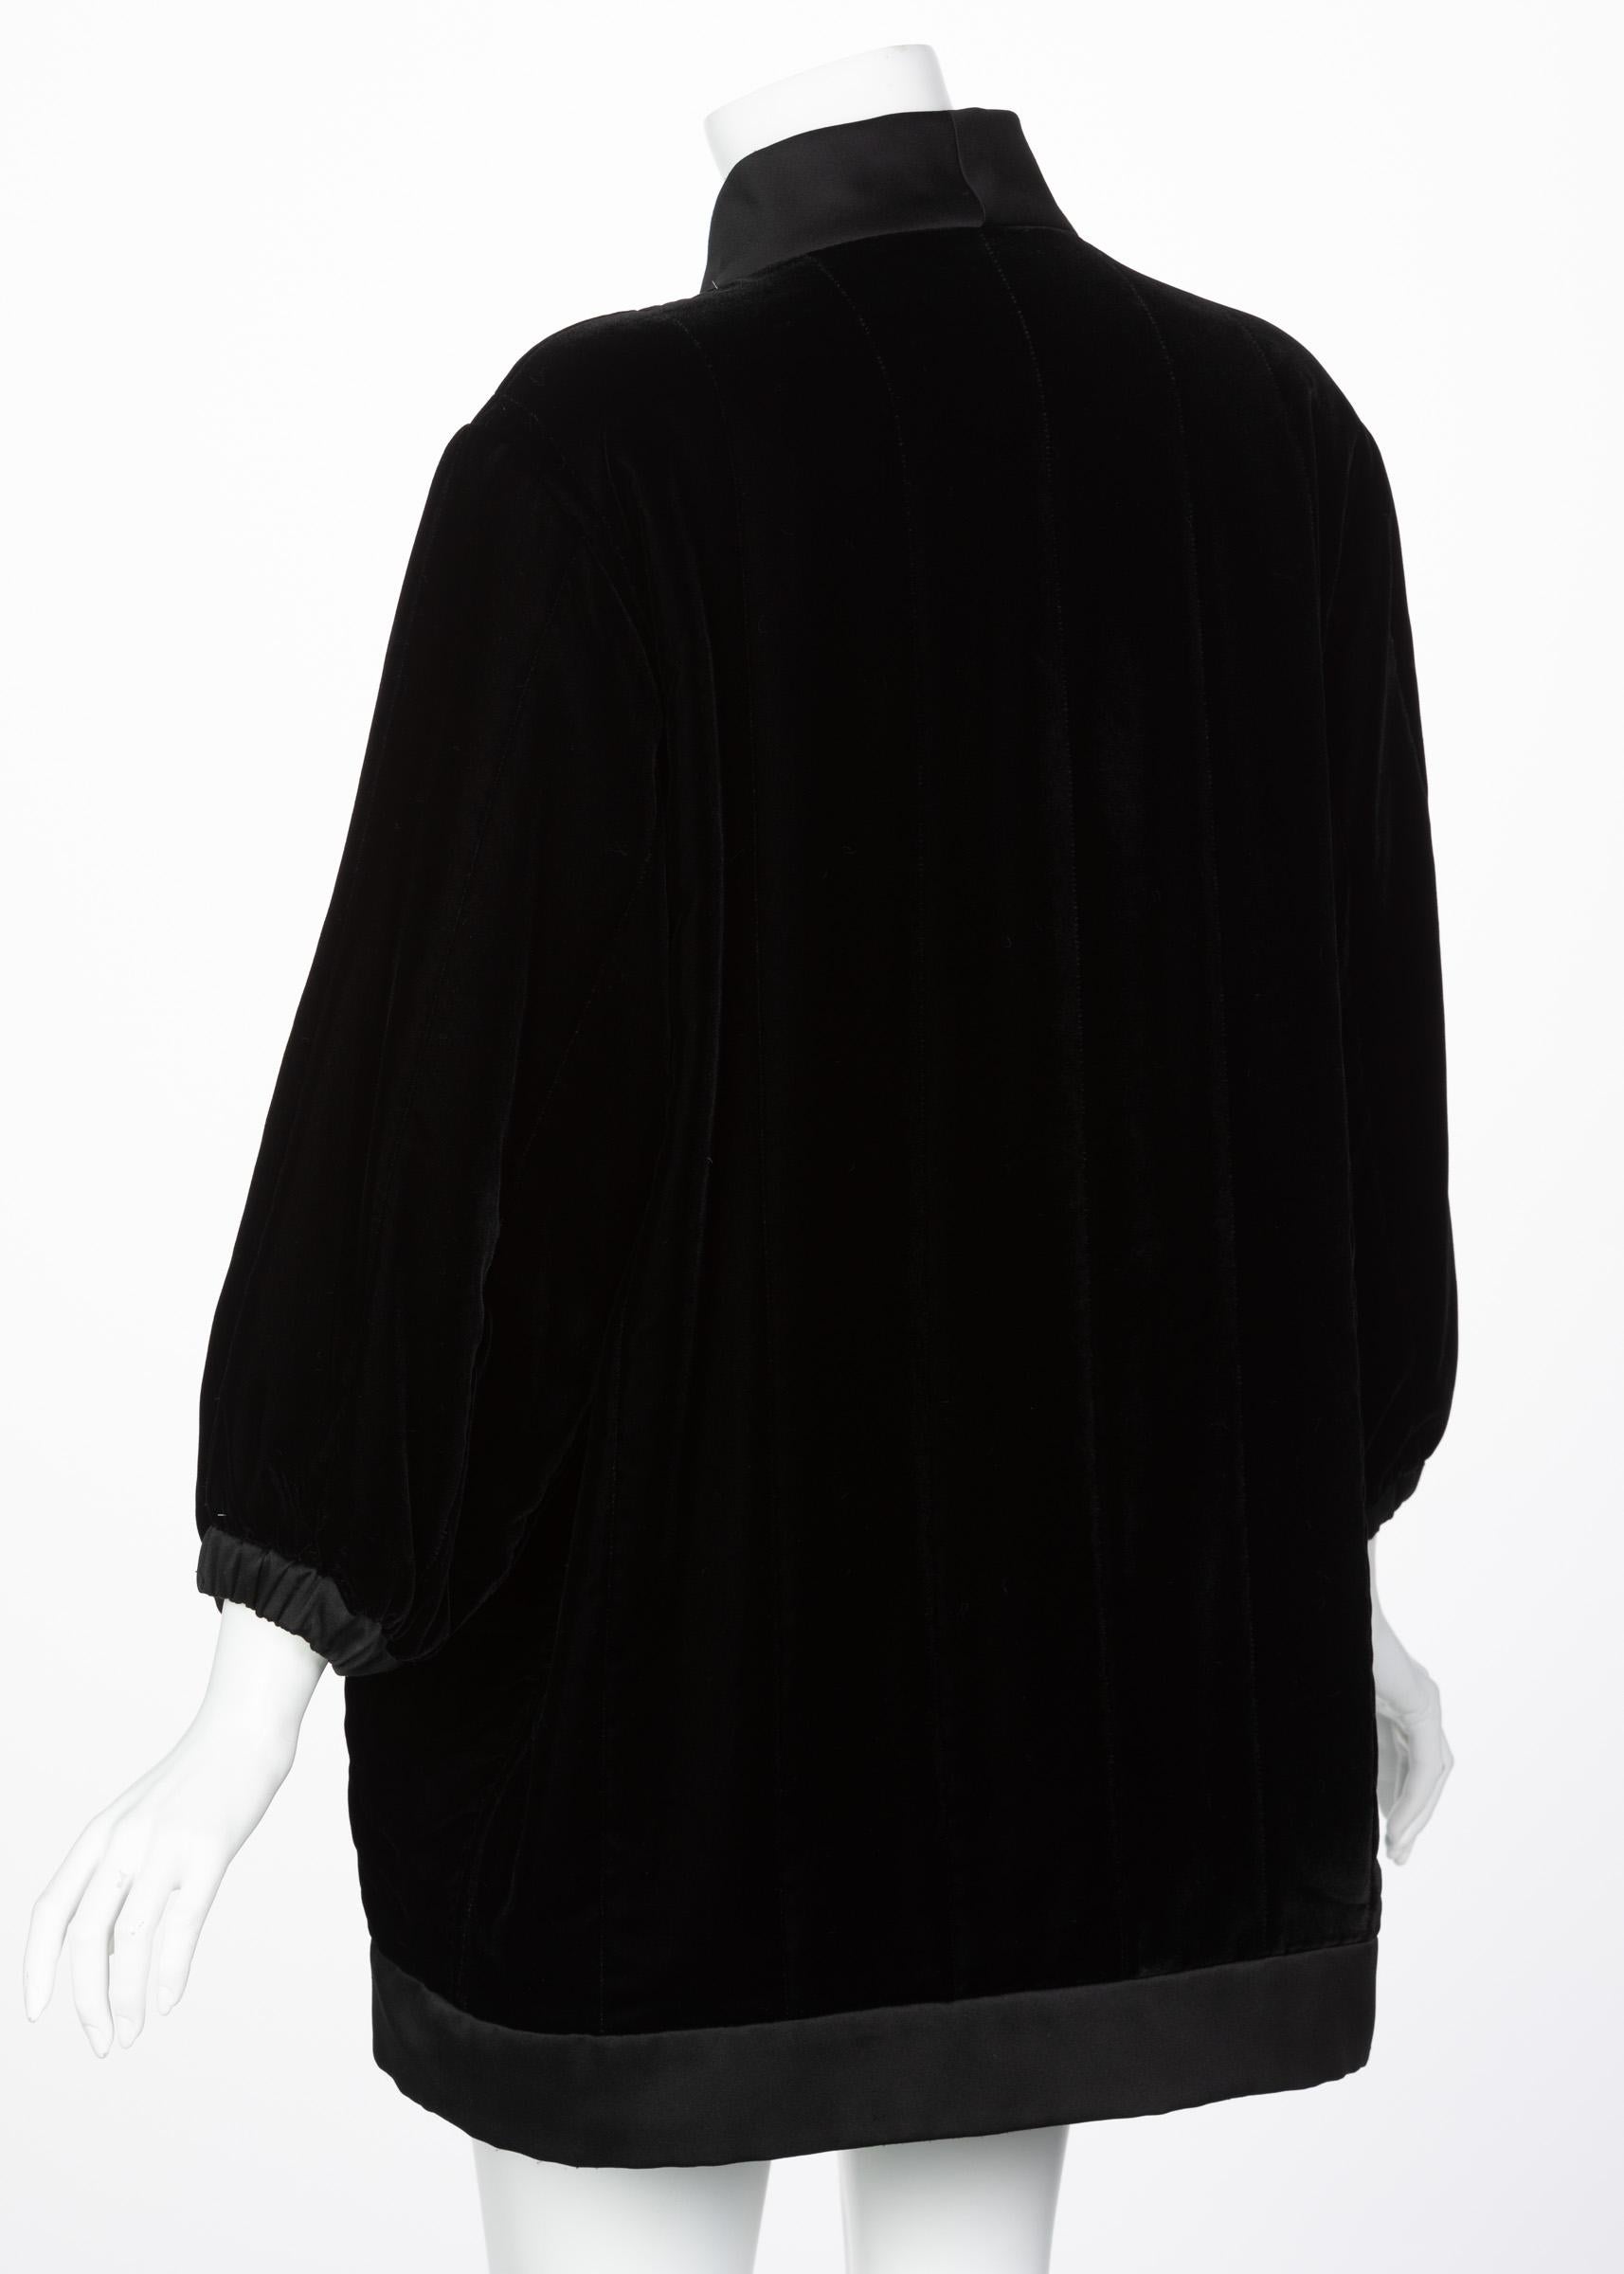  Yves Saint Laurent Black Velvet Jacket YSL, 1990s In Excellent Condition For Sale In Boca Raton, FL